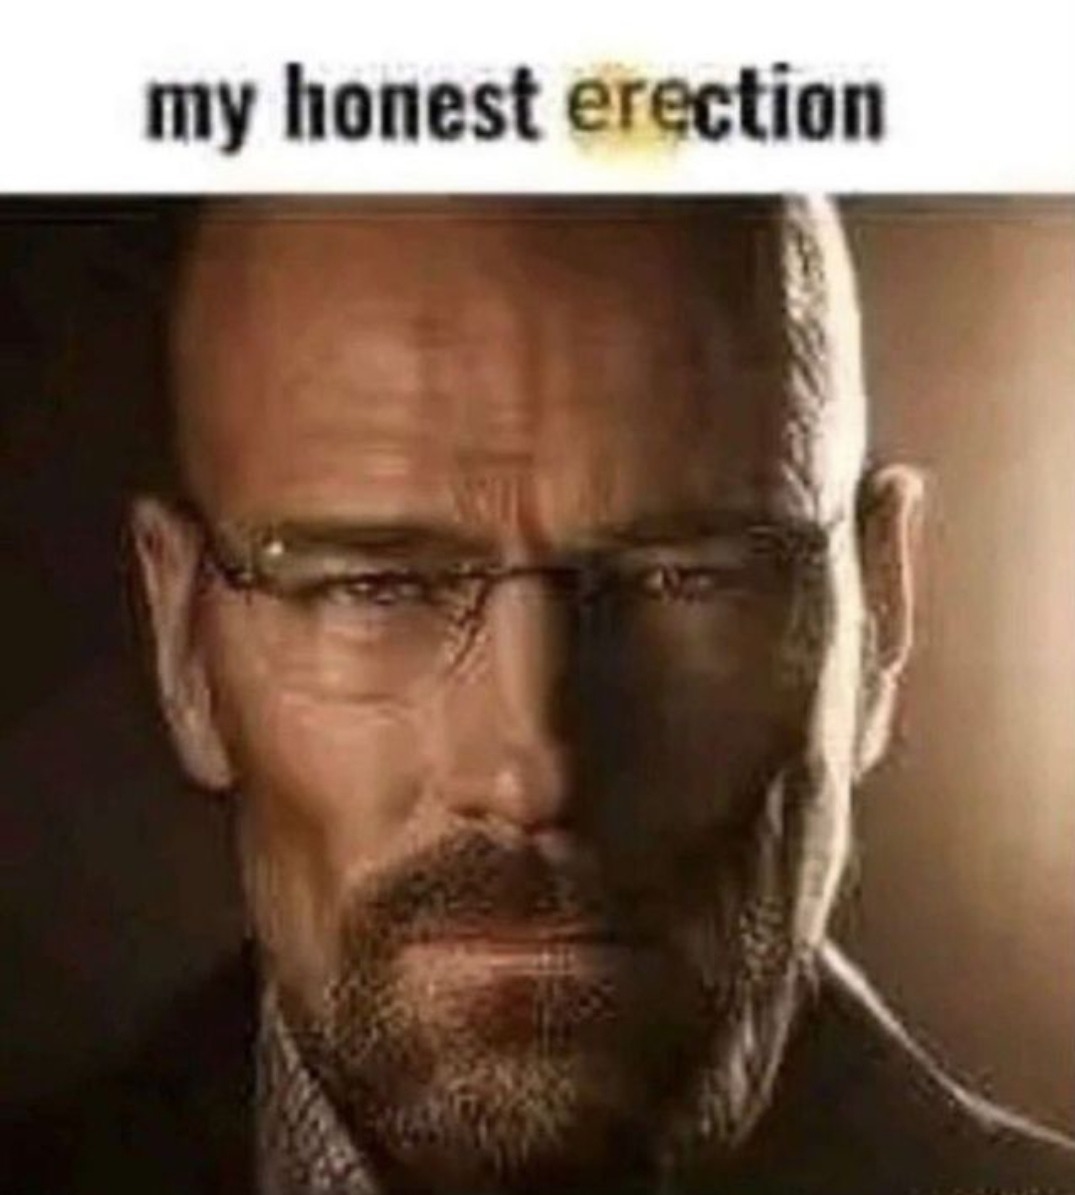 erection meme gif